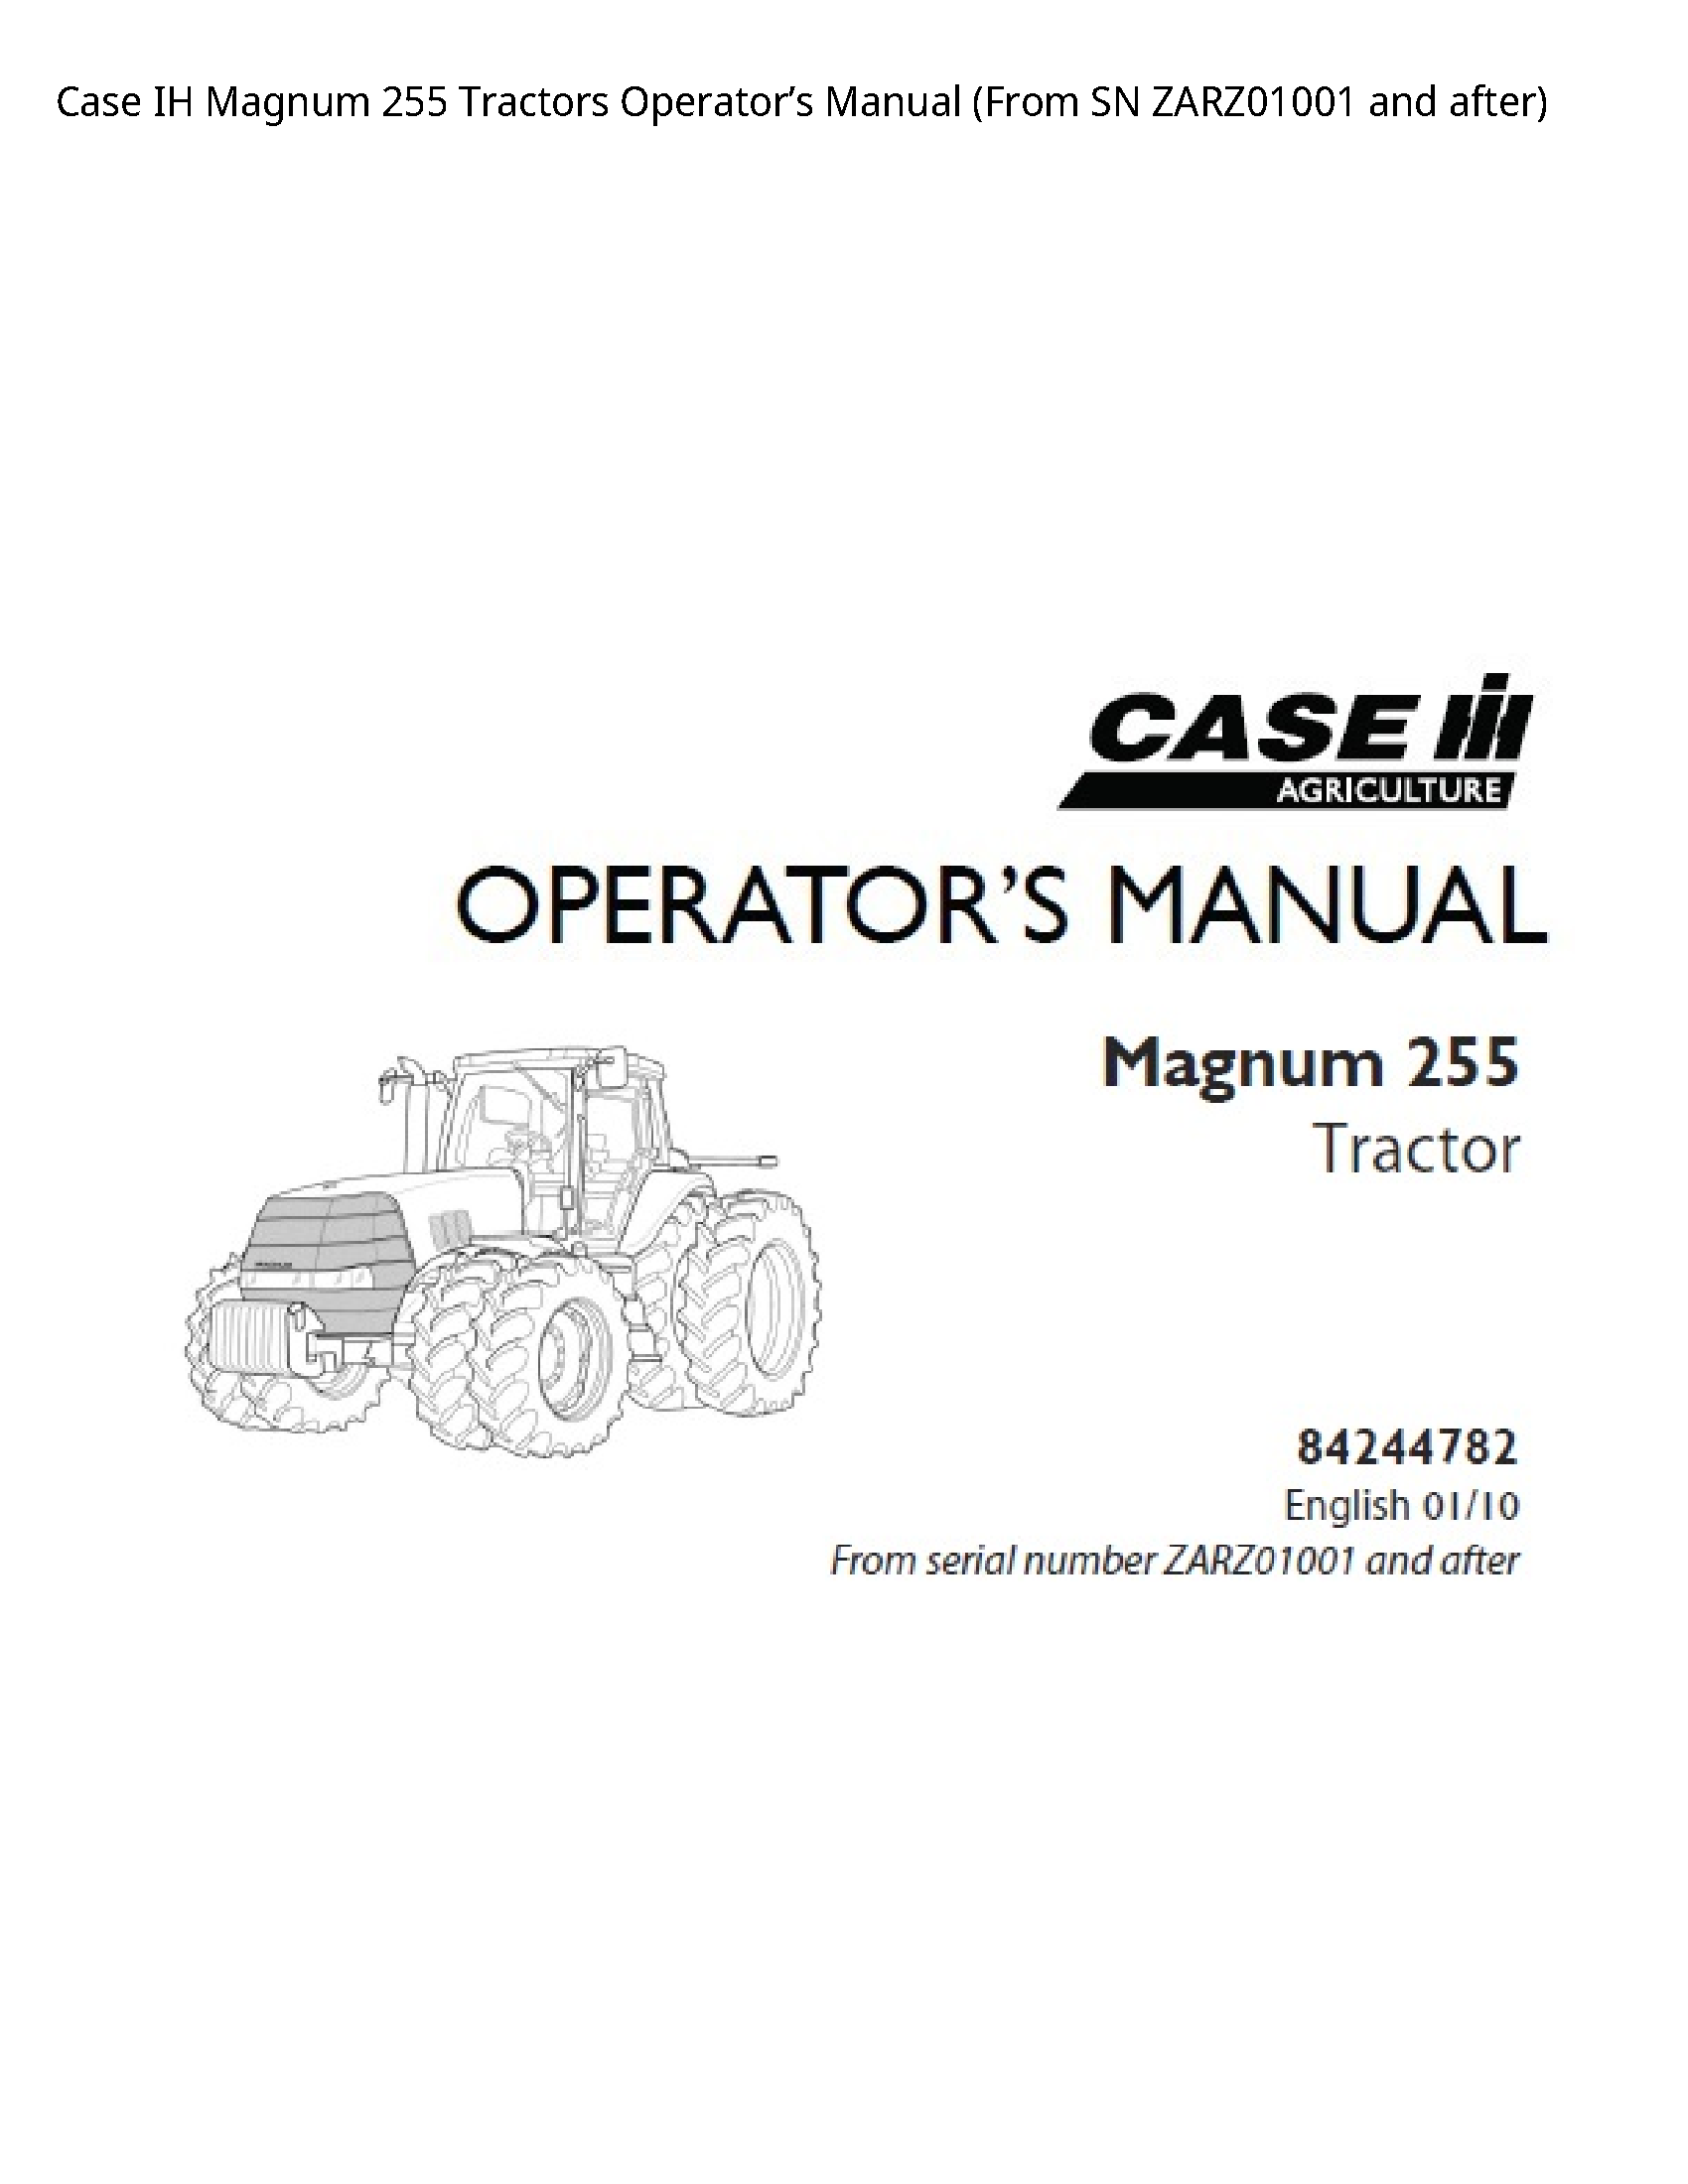 Case/Case IH 255 IH Magnum Tractors Operator’s manual